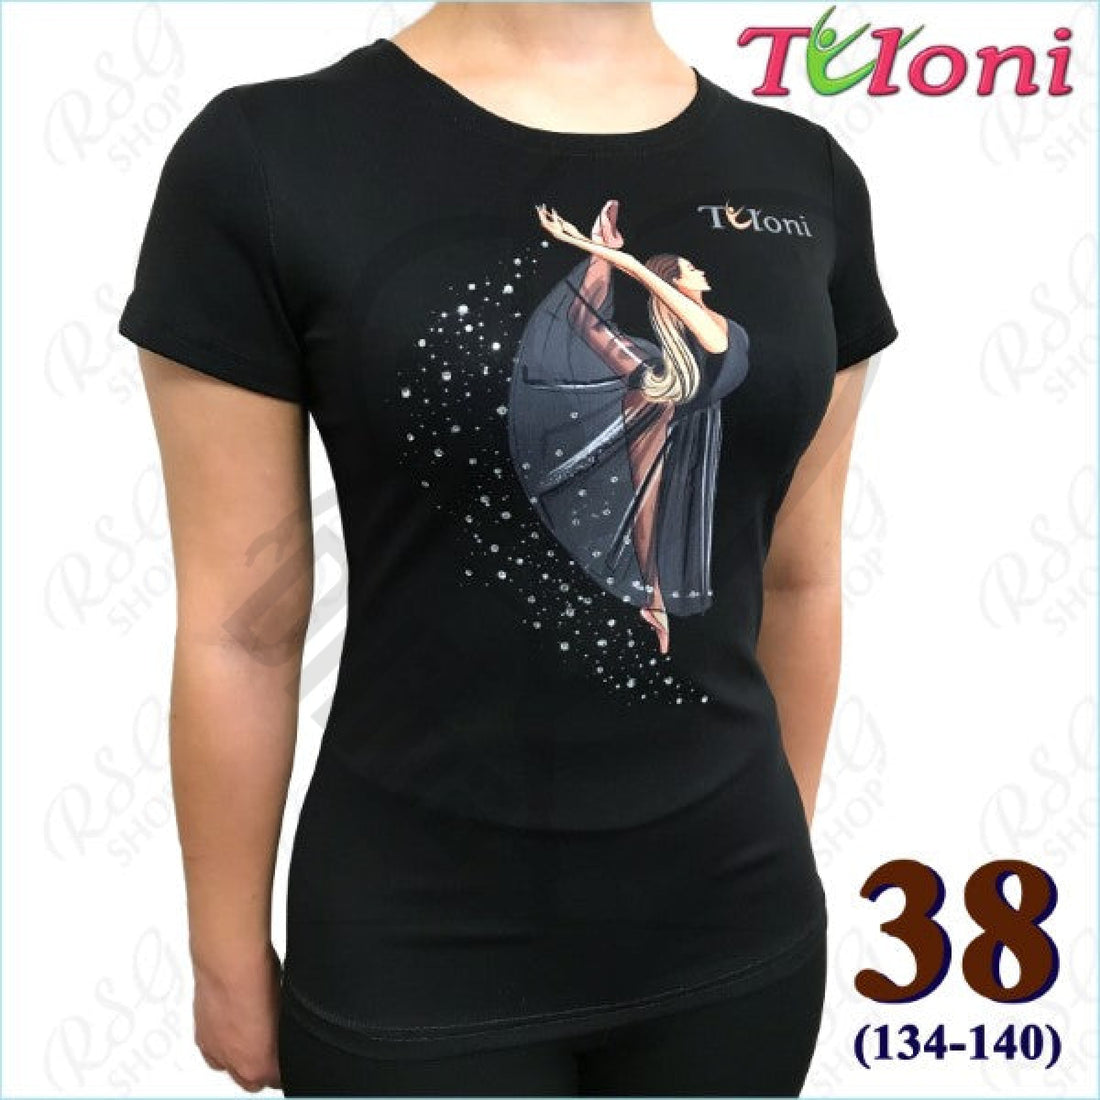 Tuloni Black T-Shirt Mod. Ballet 38 (134-140) T Shirts & Tops